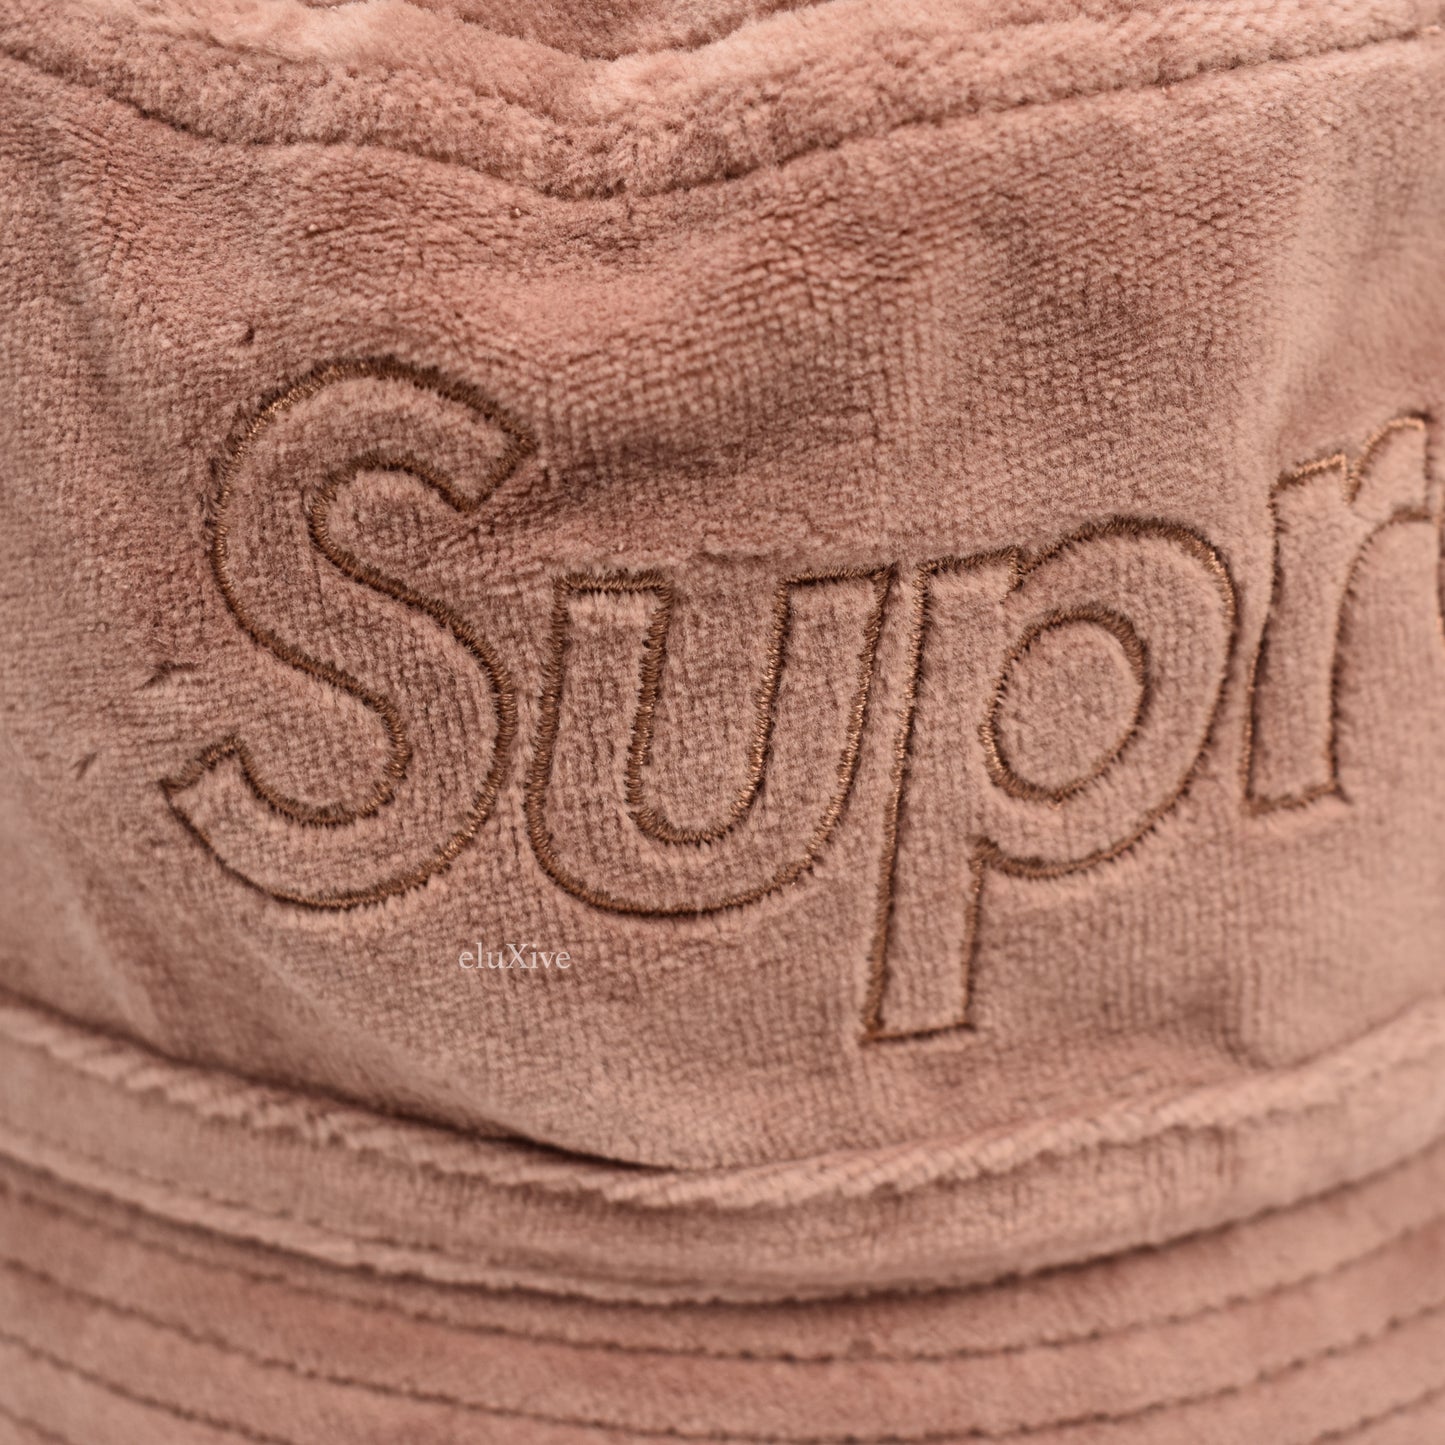 Supreme x Lacoste - Light Maroon Velour Crusher Hat